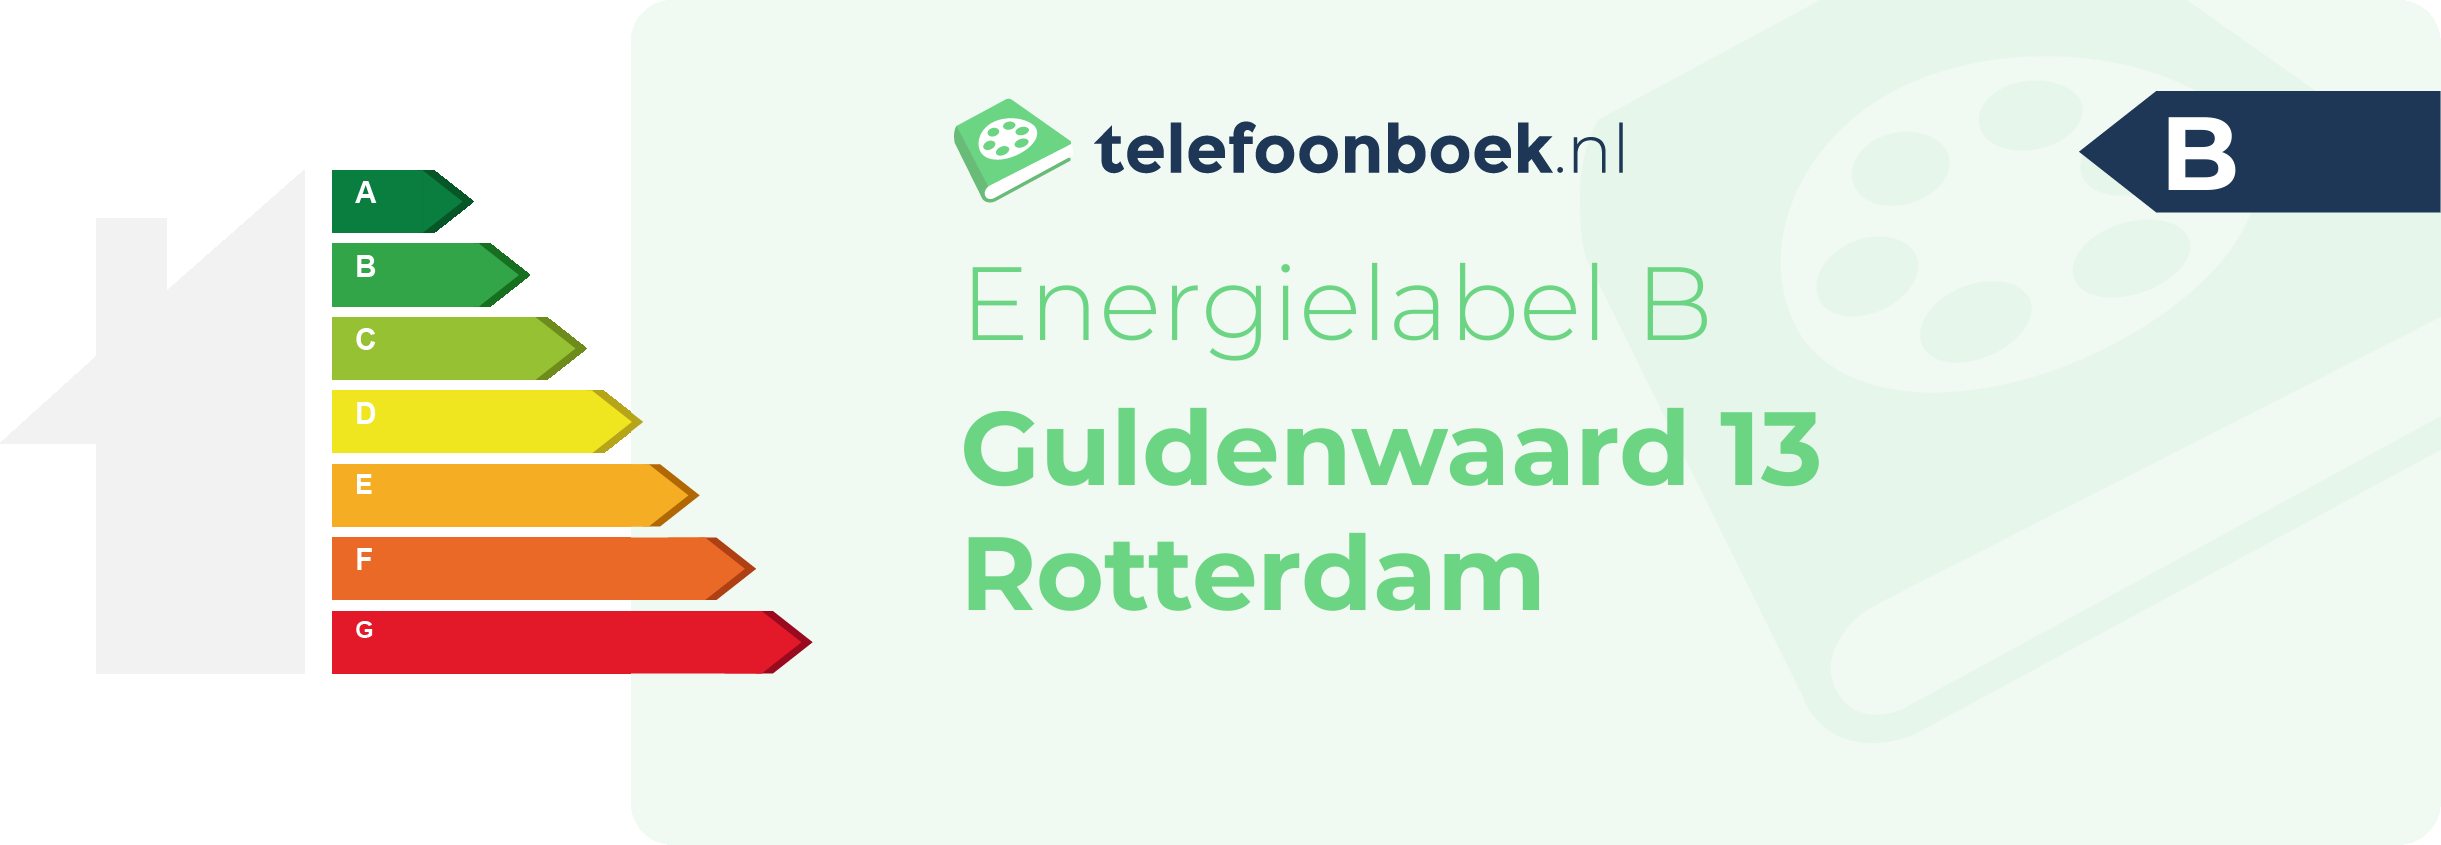 Energielabel Guldenwaard 13 Rotterdam